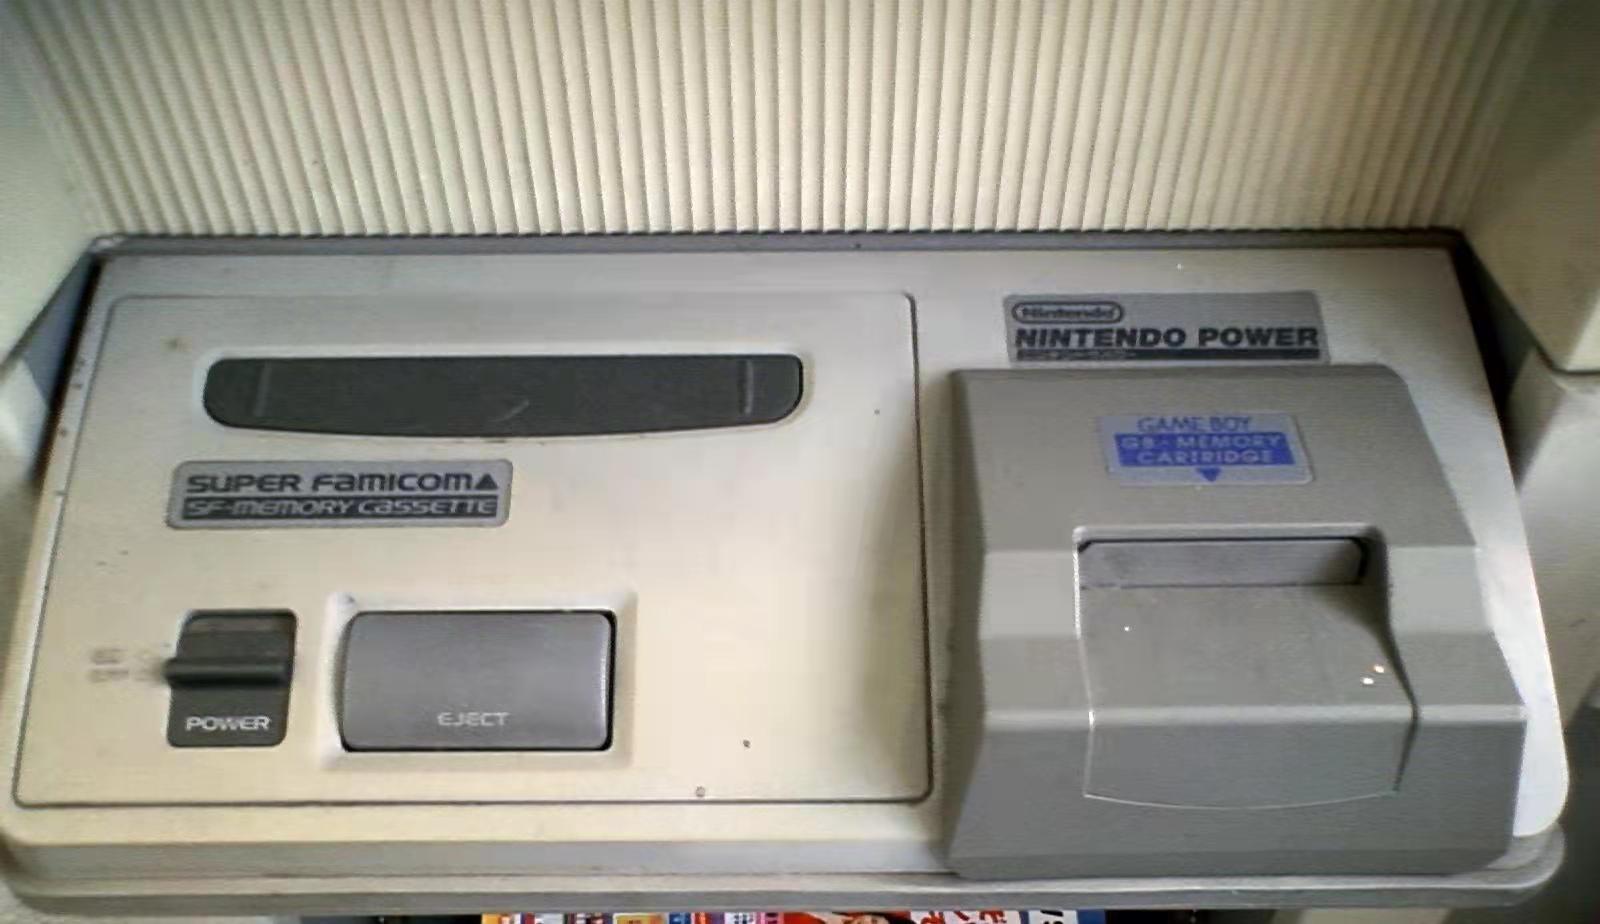 Nintendo Power店頭燒錄機，包含SFC和GB雙端